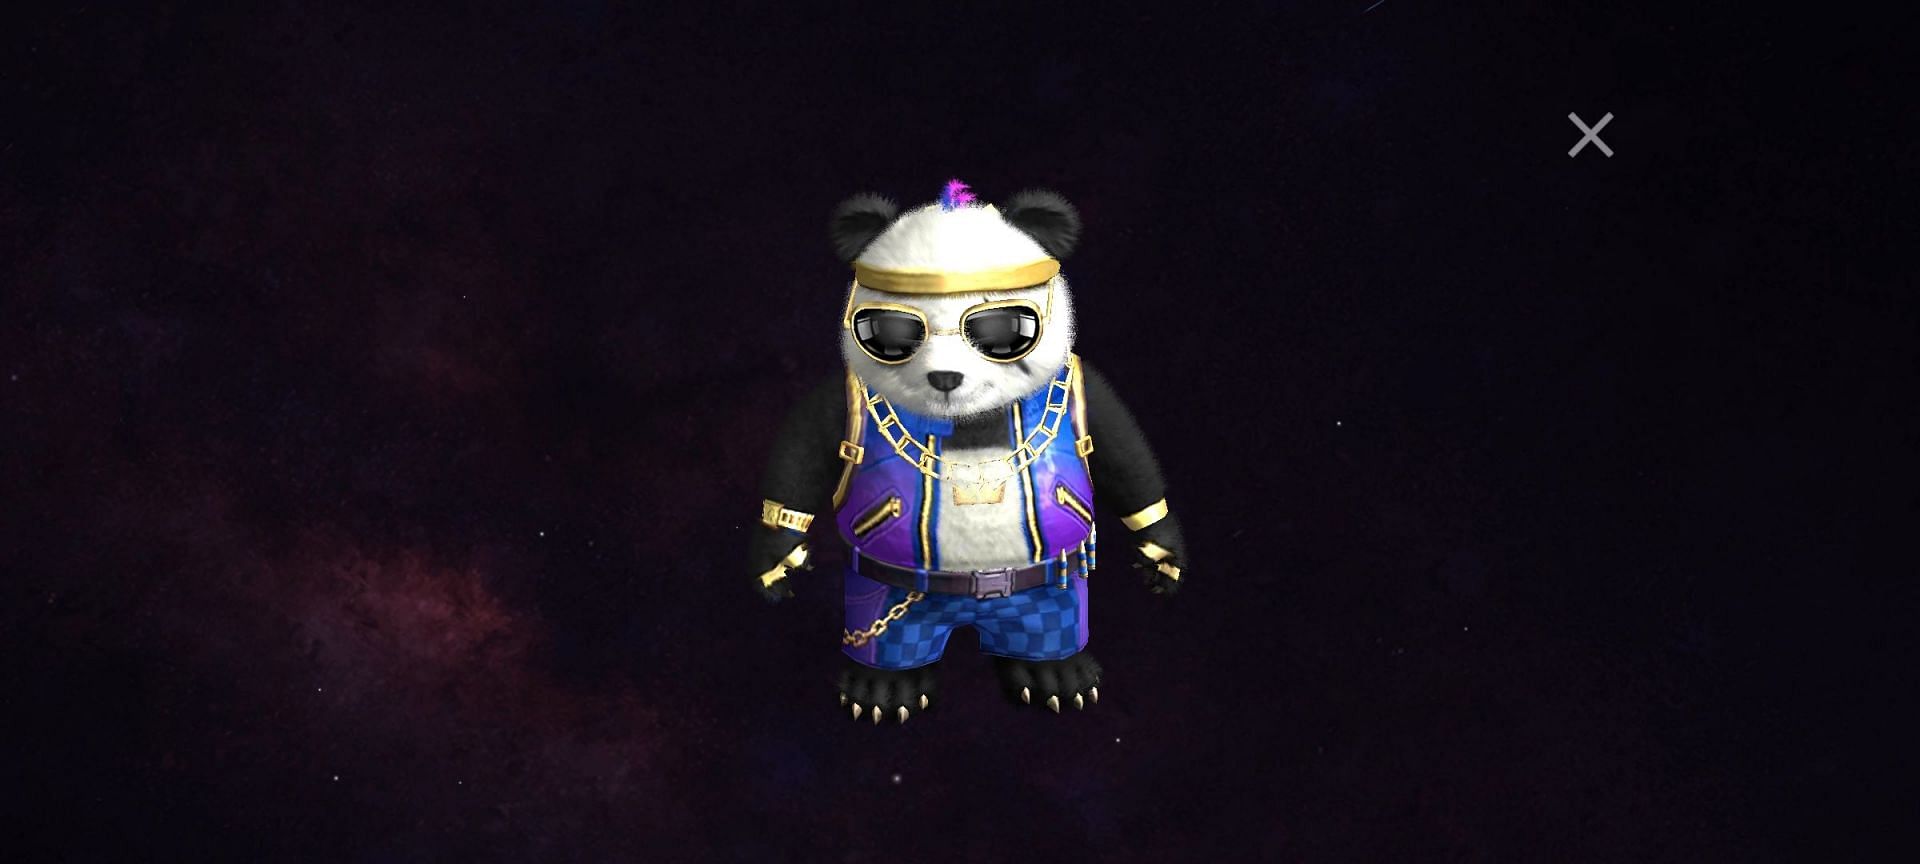 Detective Panda (Image via Garena)